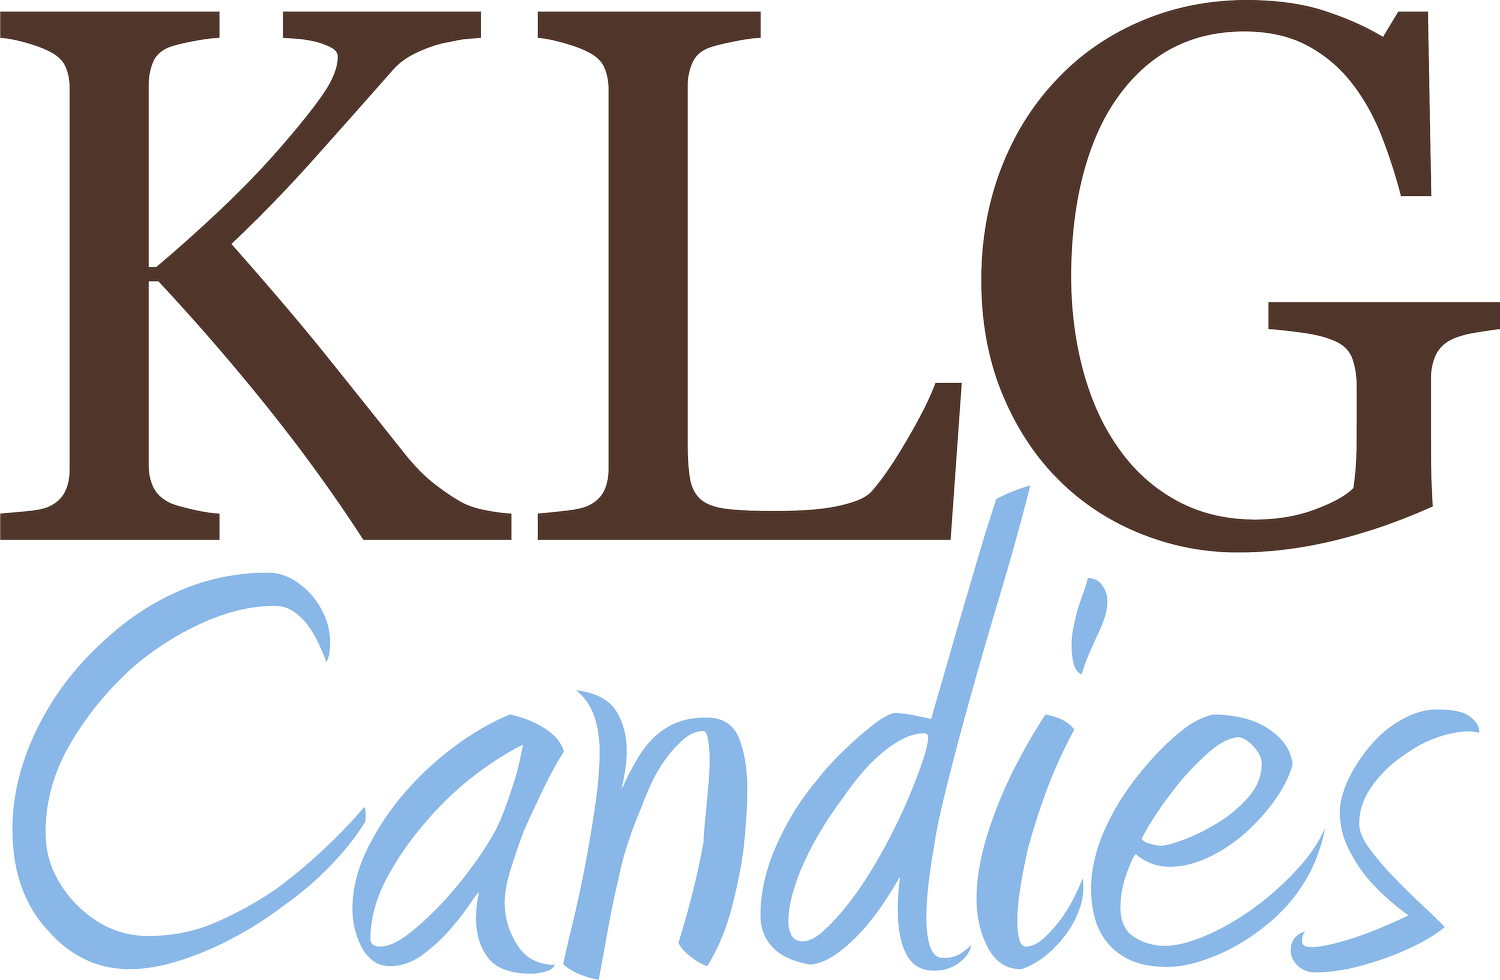 KLG Candies, LLC